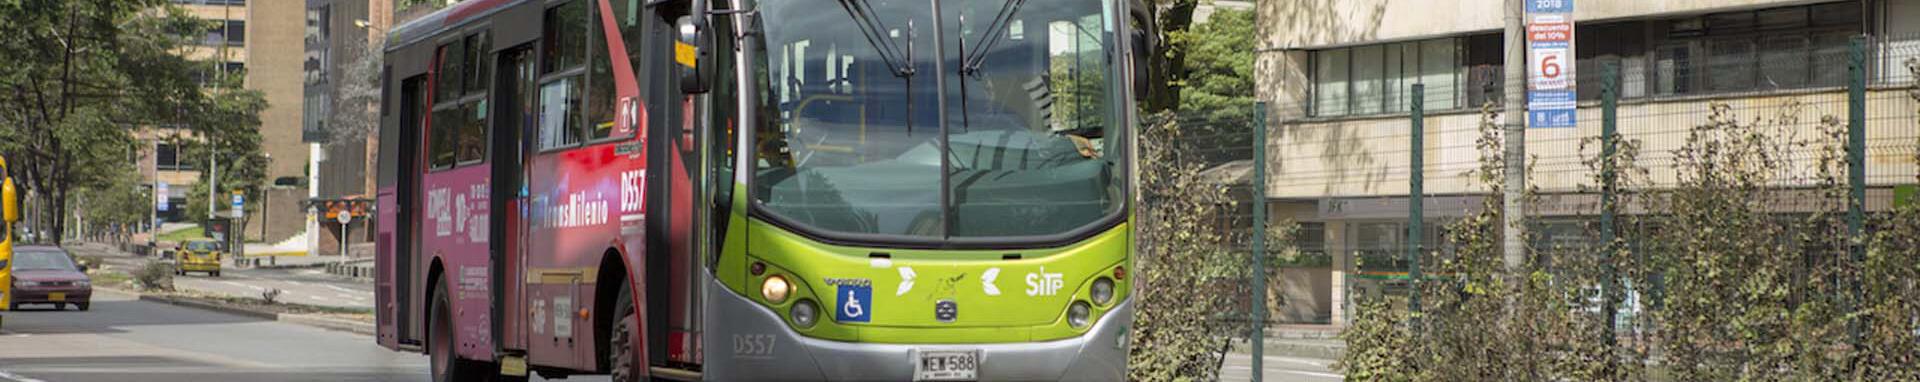 CIF Action Hybrid Bus in Bogotá, Colombia Copyright CIF 2018